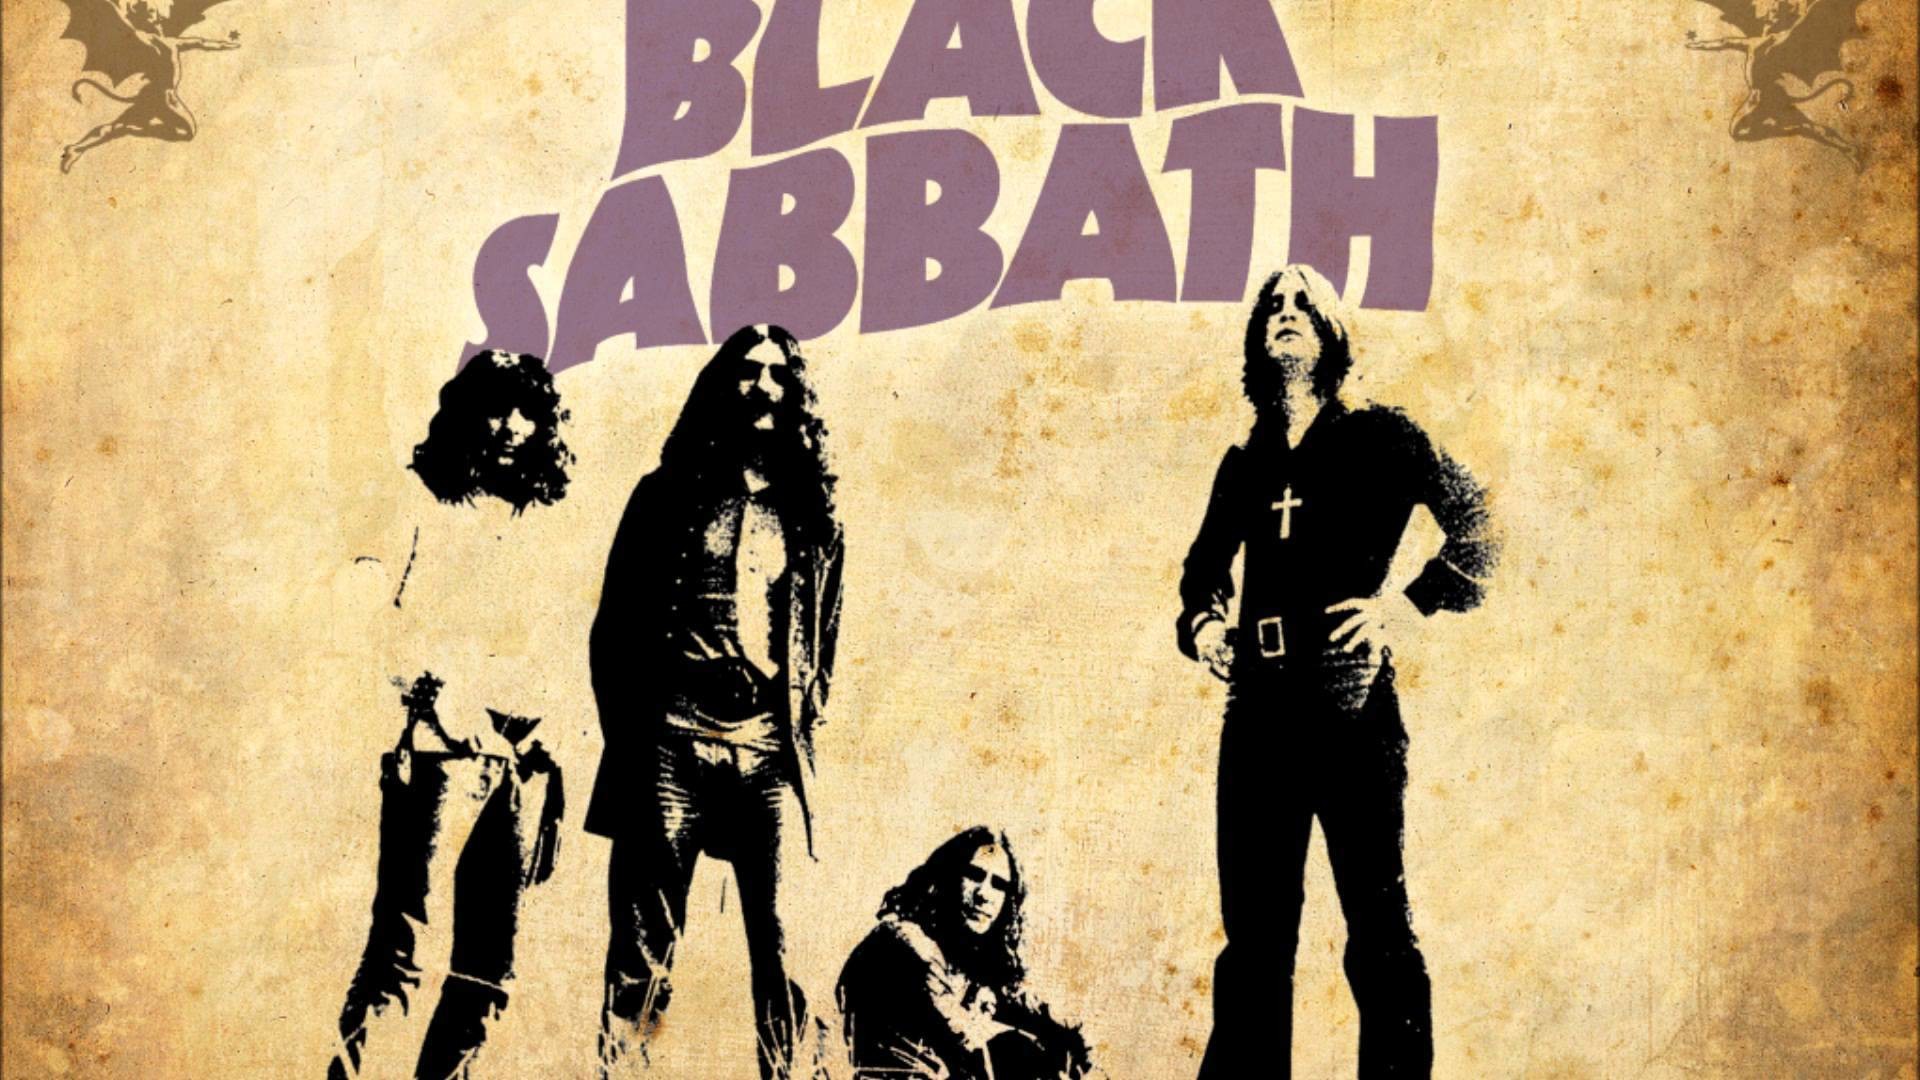 1920x1080 Black Sabbath Desktop